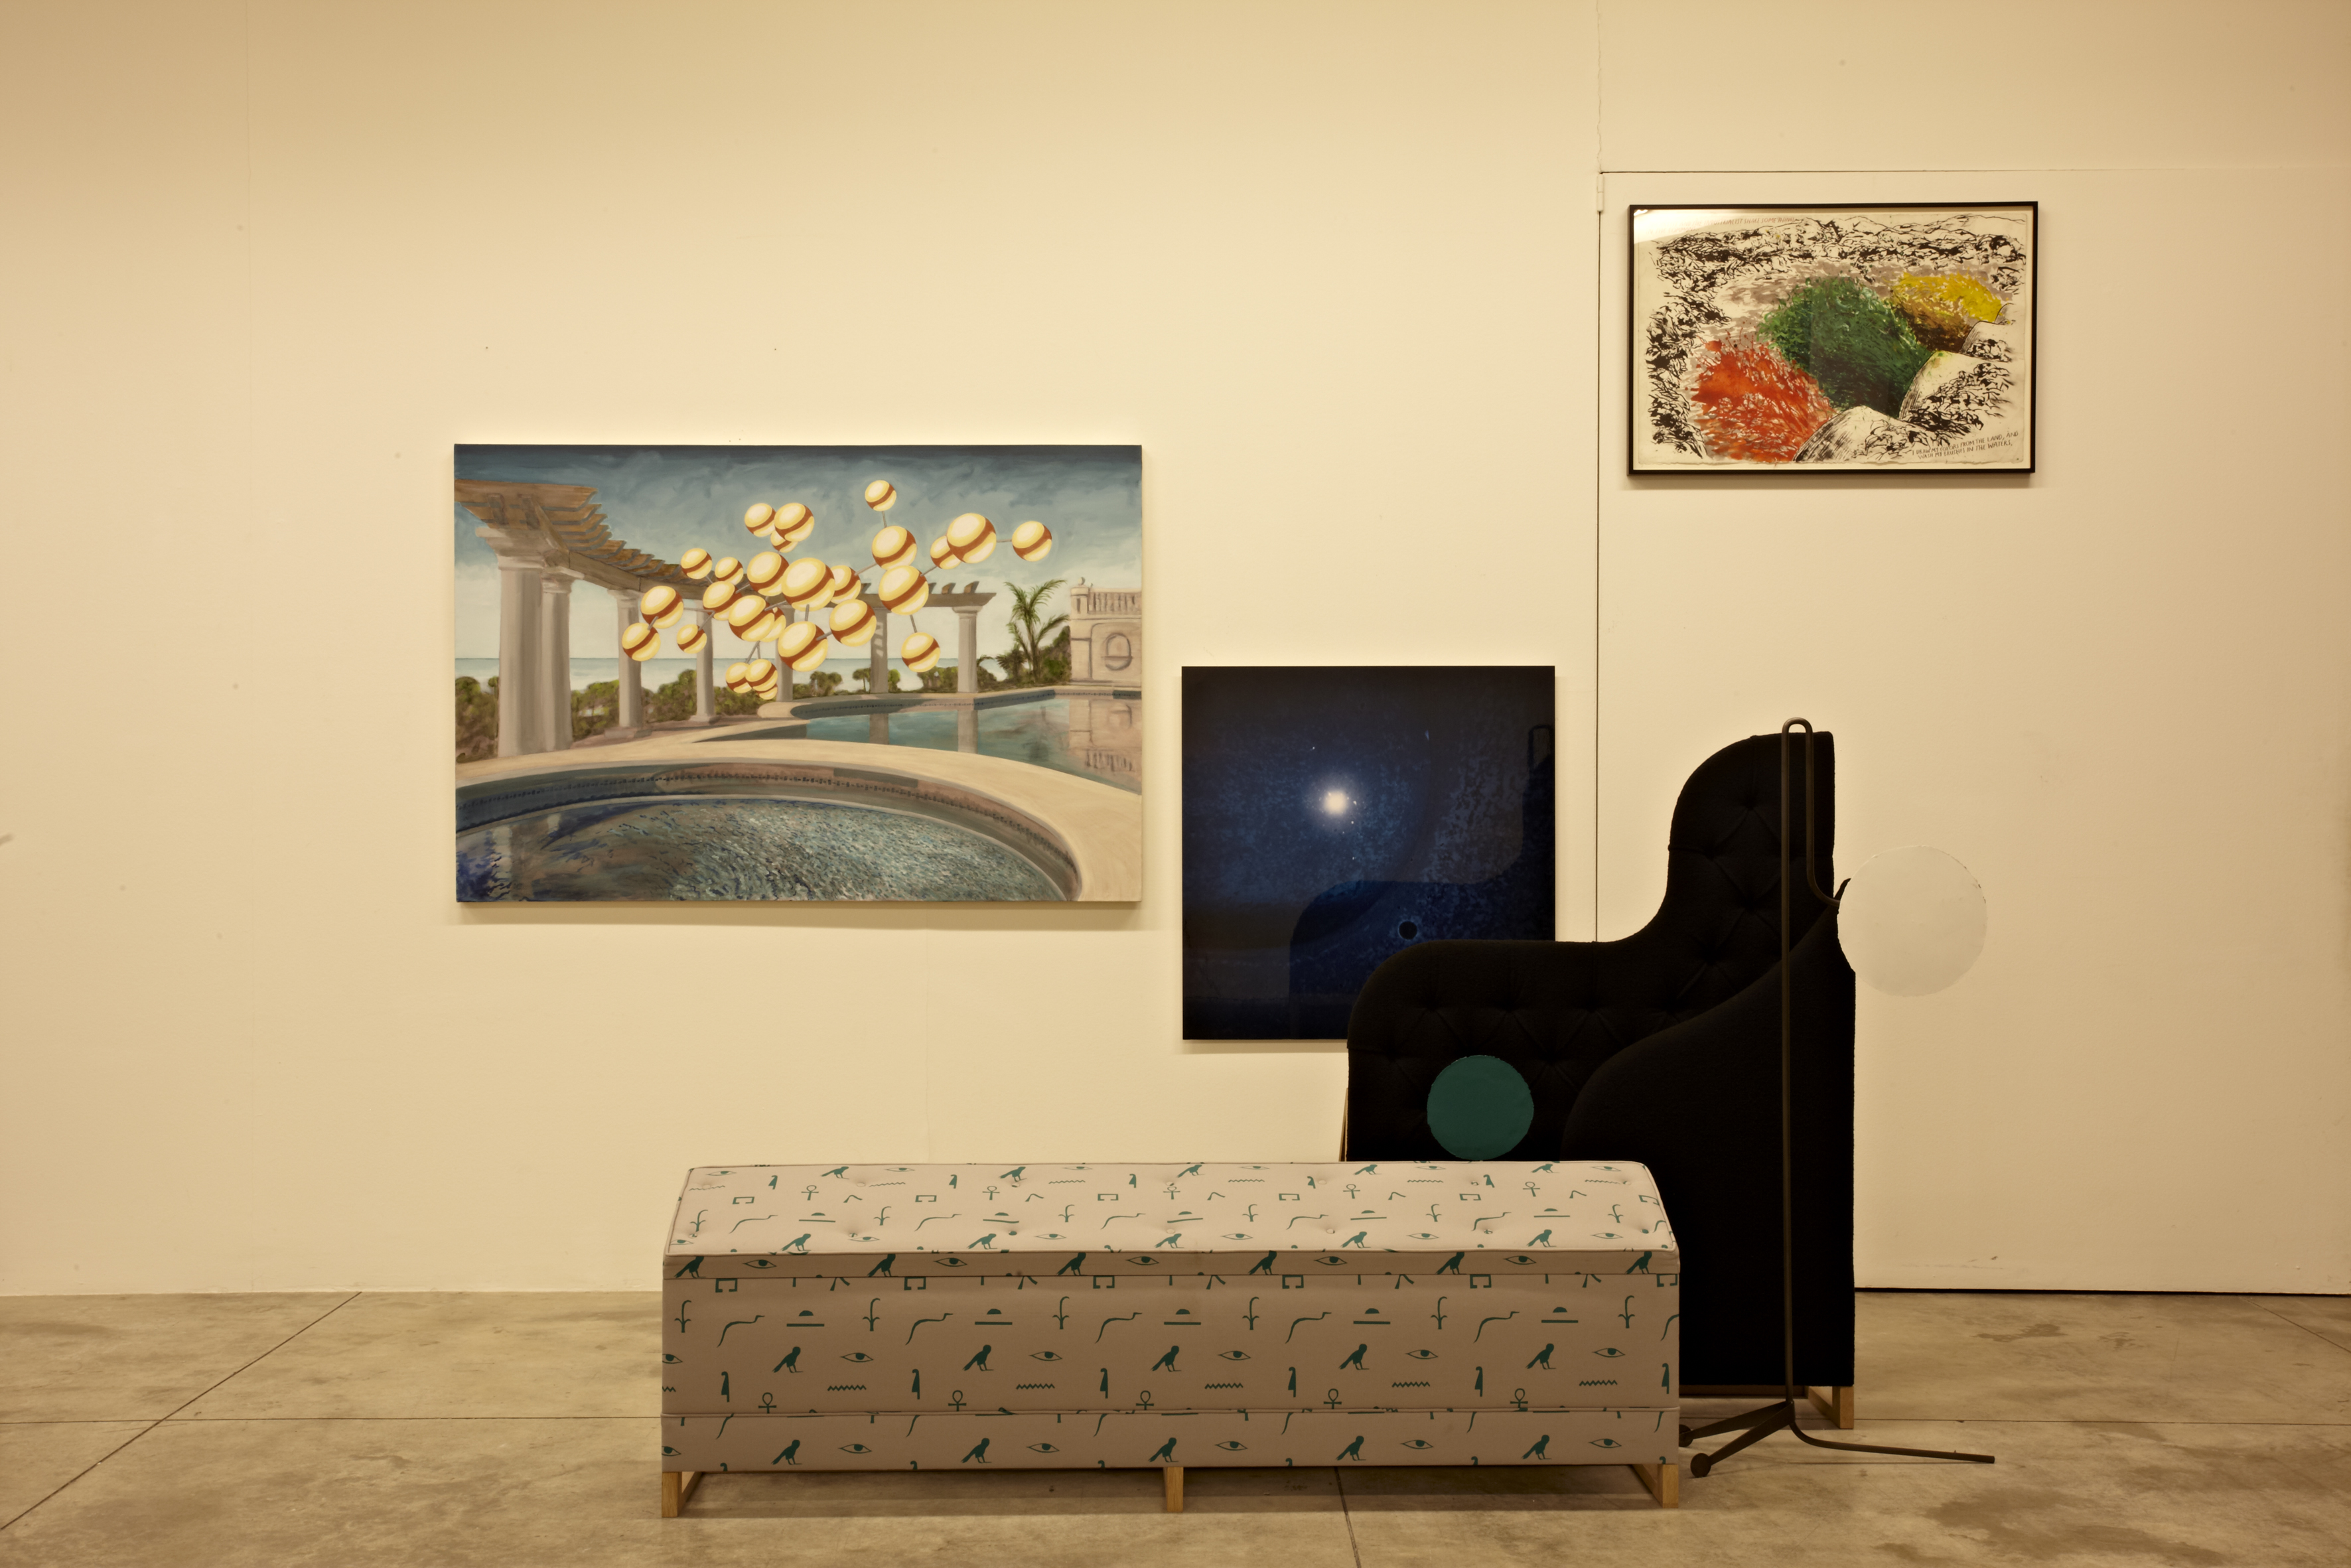 Installation View, Set Pieces, curated by Lauren Mackler & Andrew Berardini, Cardi Black Box, Milan, Italy